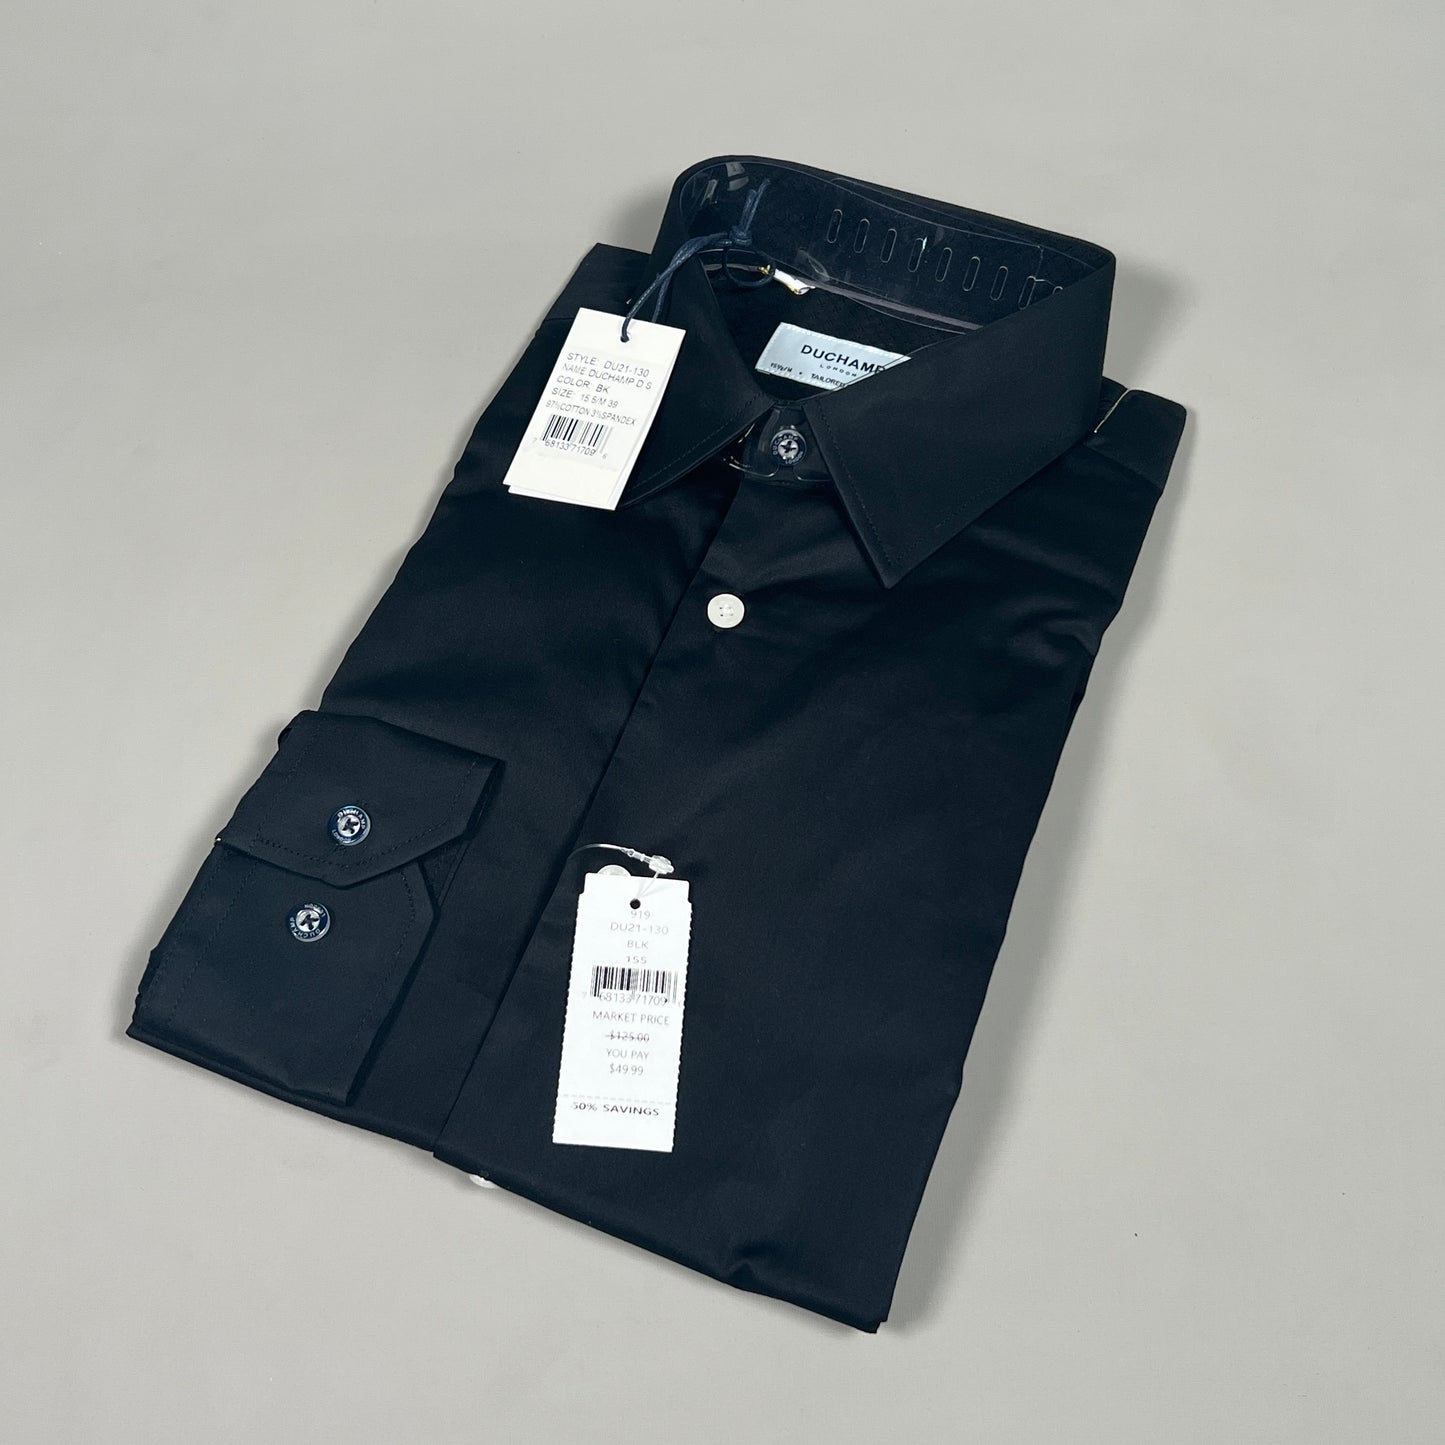 DUCHAMP LONDON Black Solid Tailored-fit Dress Shirt Men's Sz M / 39 / 15.5 (New)